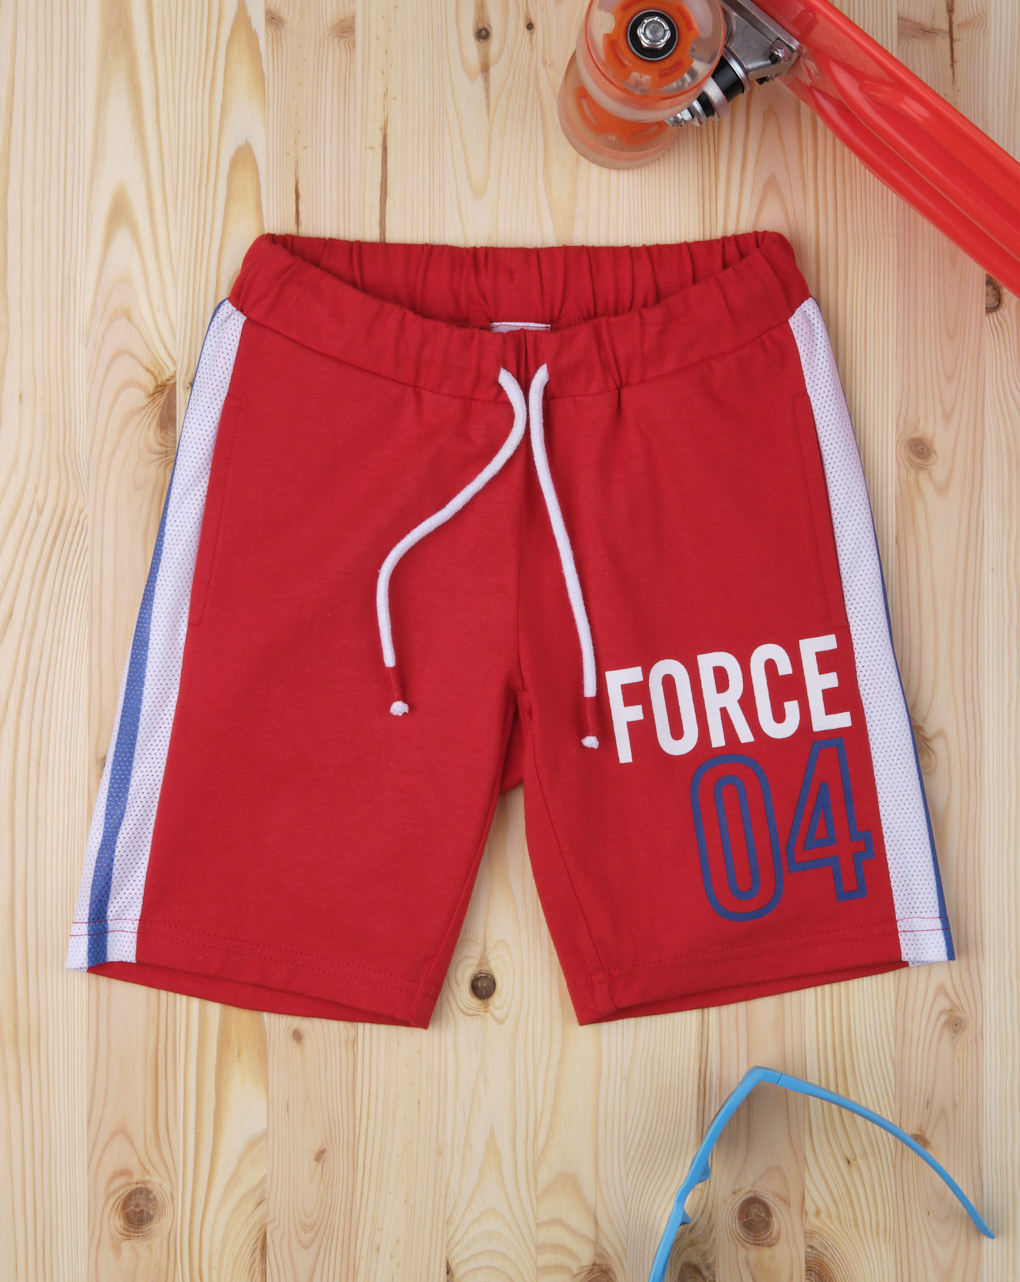 Pantalones cortos de niño "force 04" - Prénatal